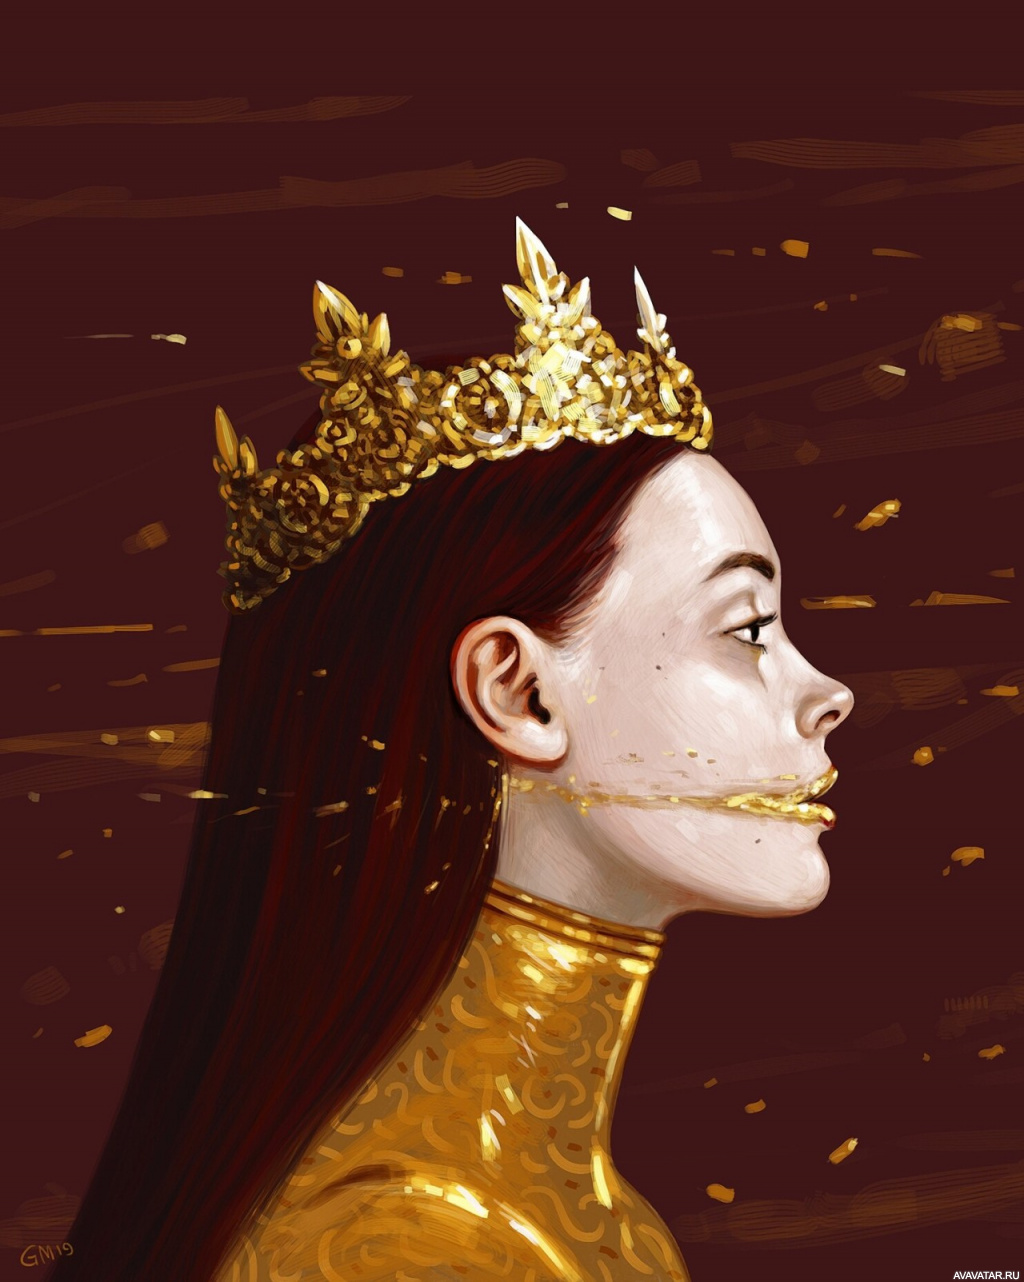 Королева картинки. Девушка в короне. Фотосессия с короной на голове. Корона на голове. Девушка в короне арт.